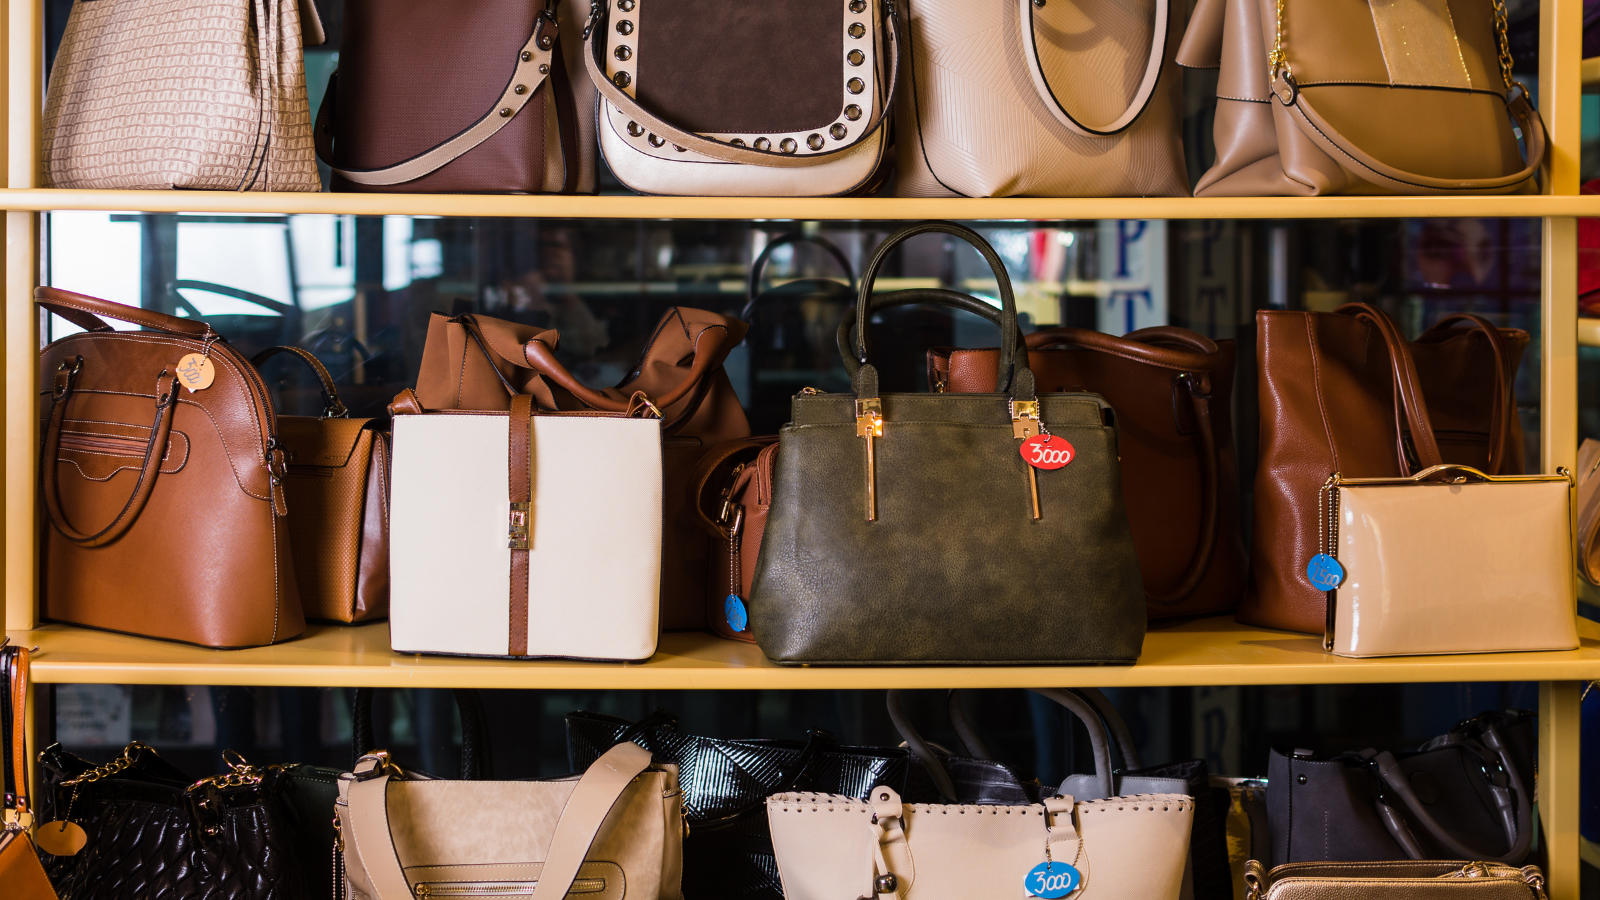 A photo of shelves displaying handbags.